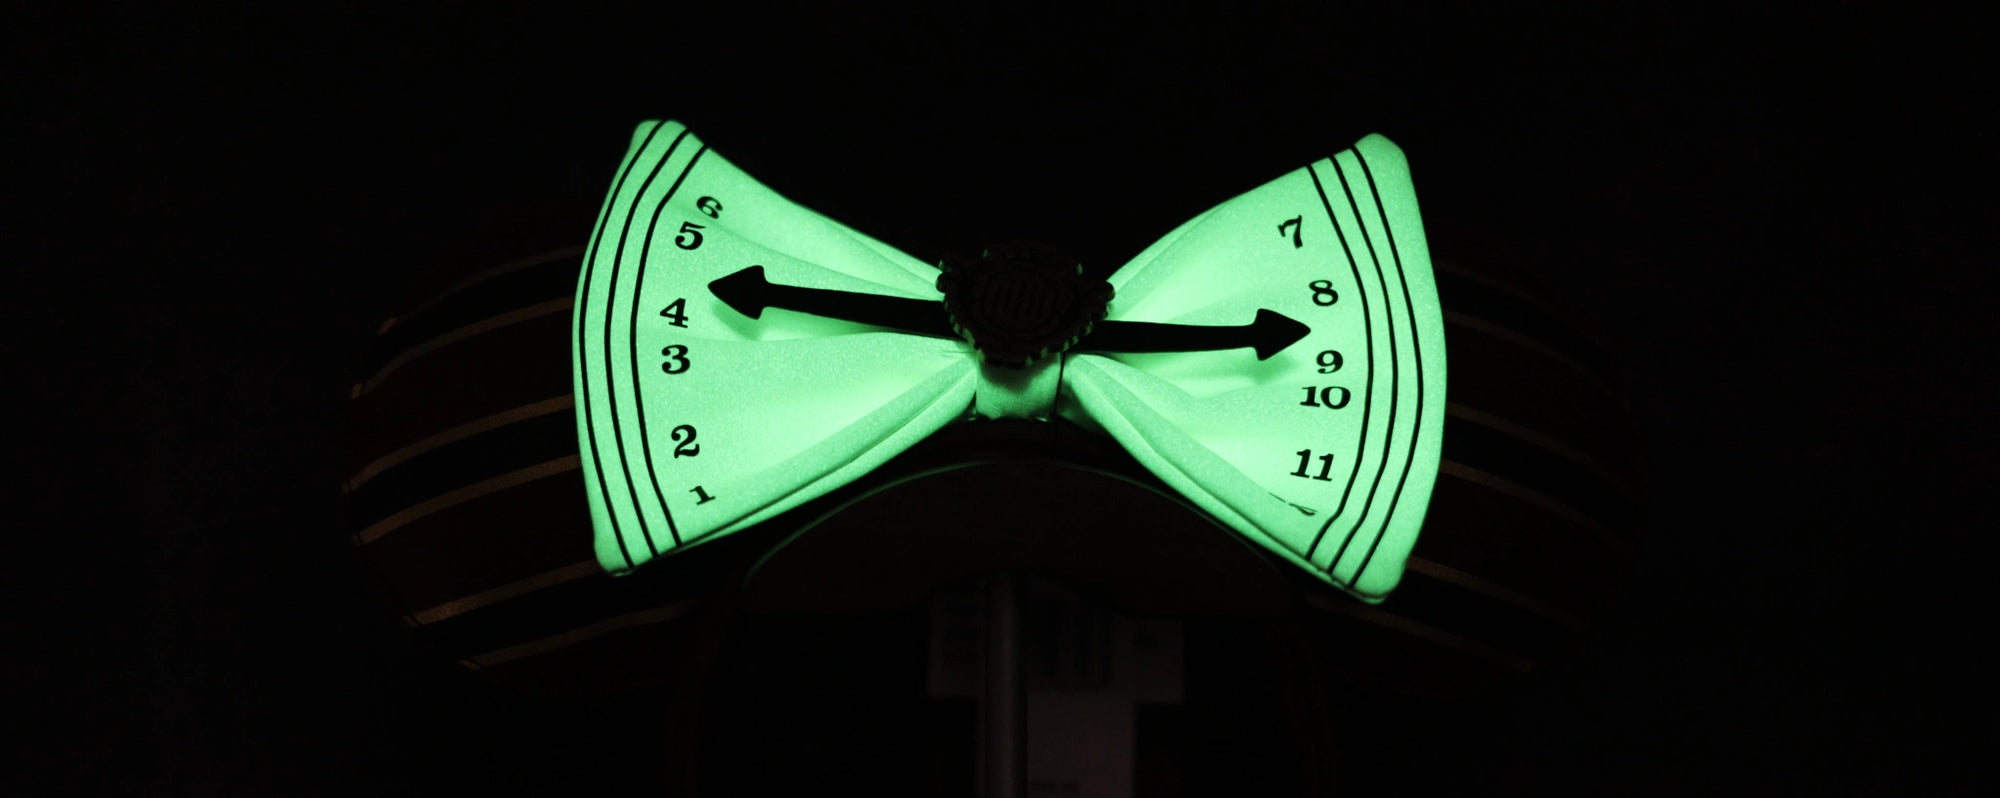 Disney Parks Loungefly Tower of Terror Glow in the Dark Minnie Ears Headband - PRE ORDER